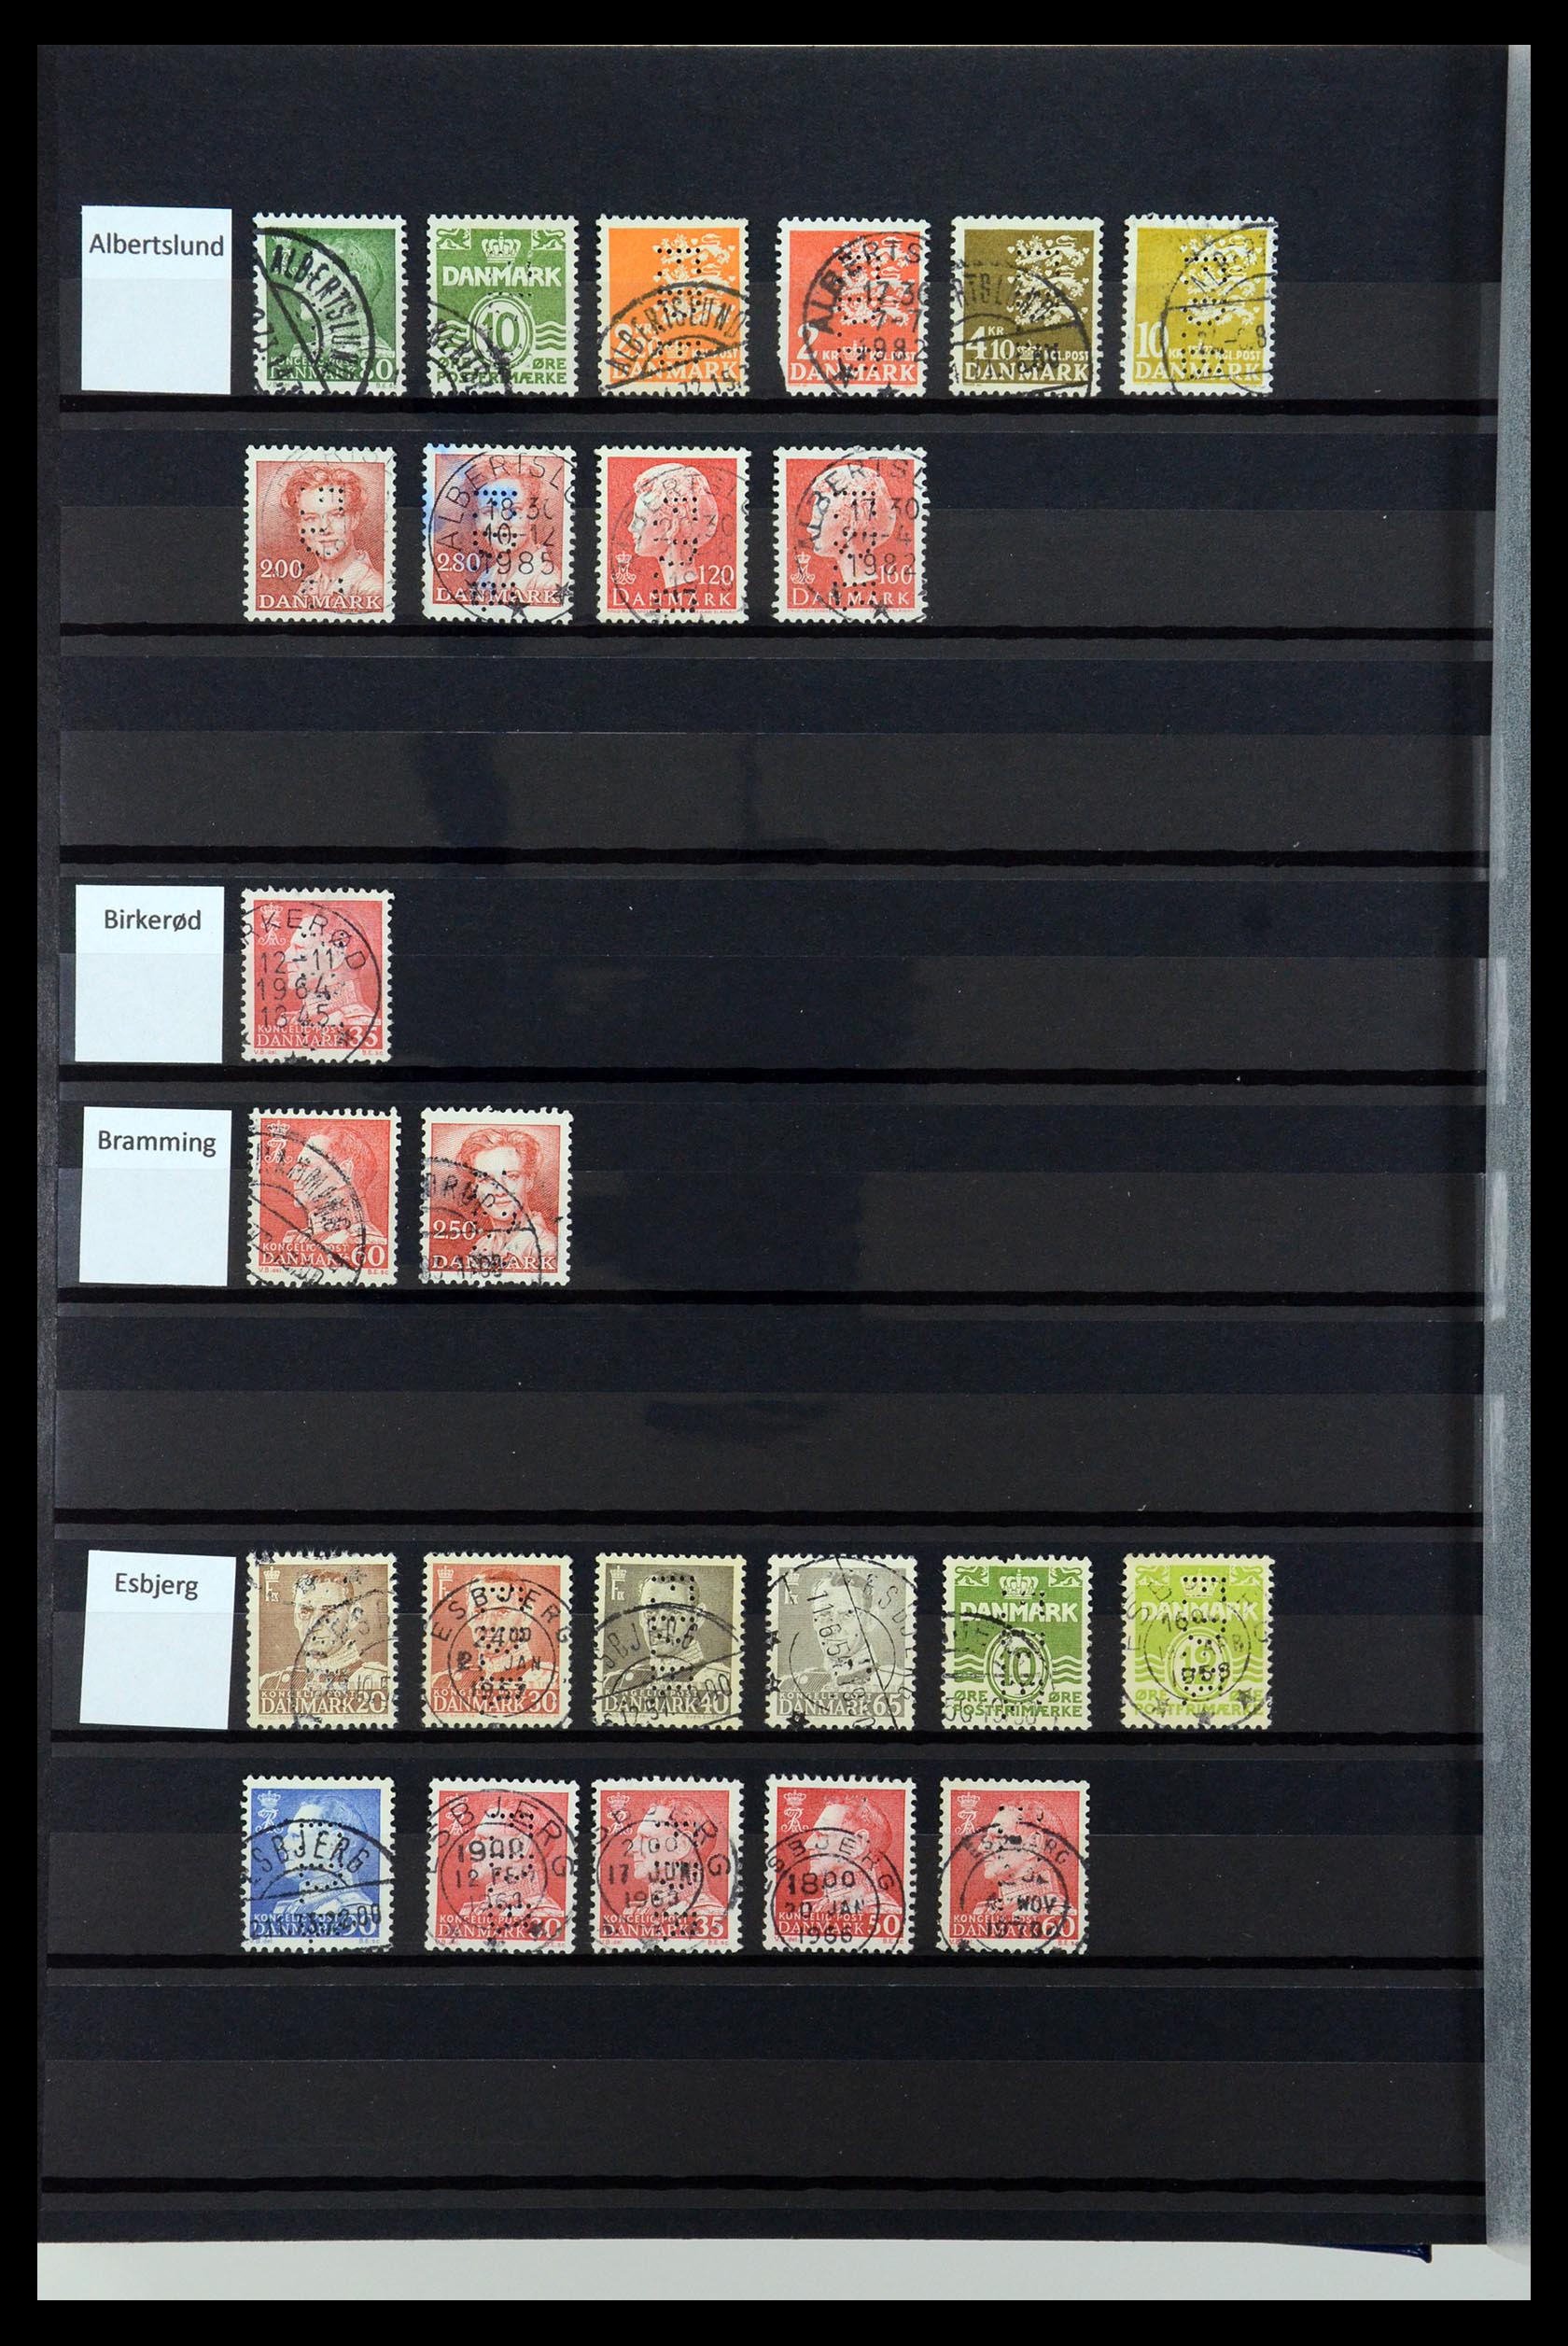 36396 068 - Stamp collection 36396 Denmark perfins.